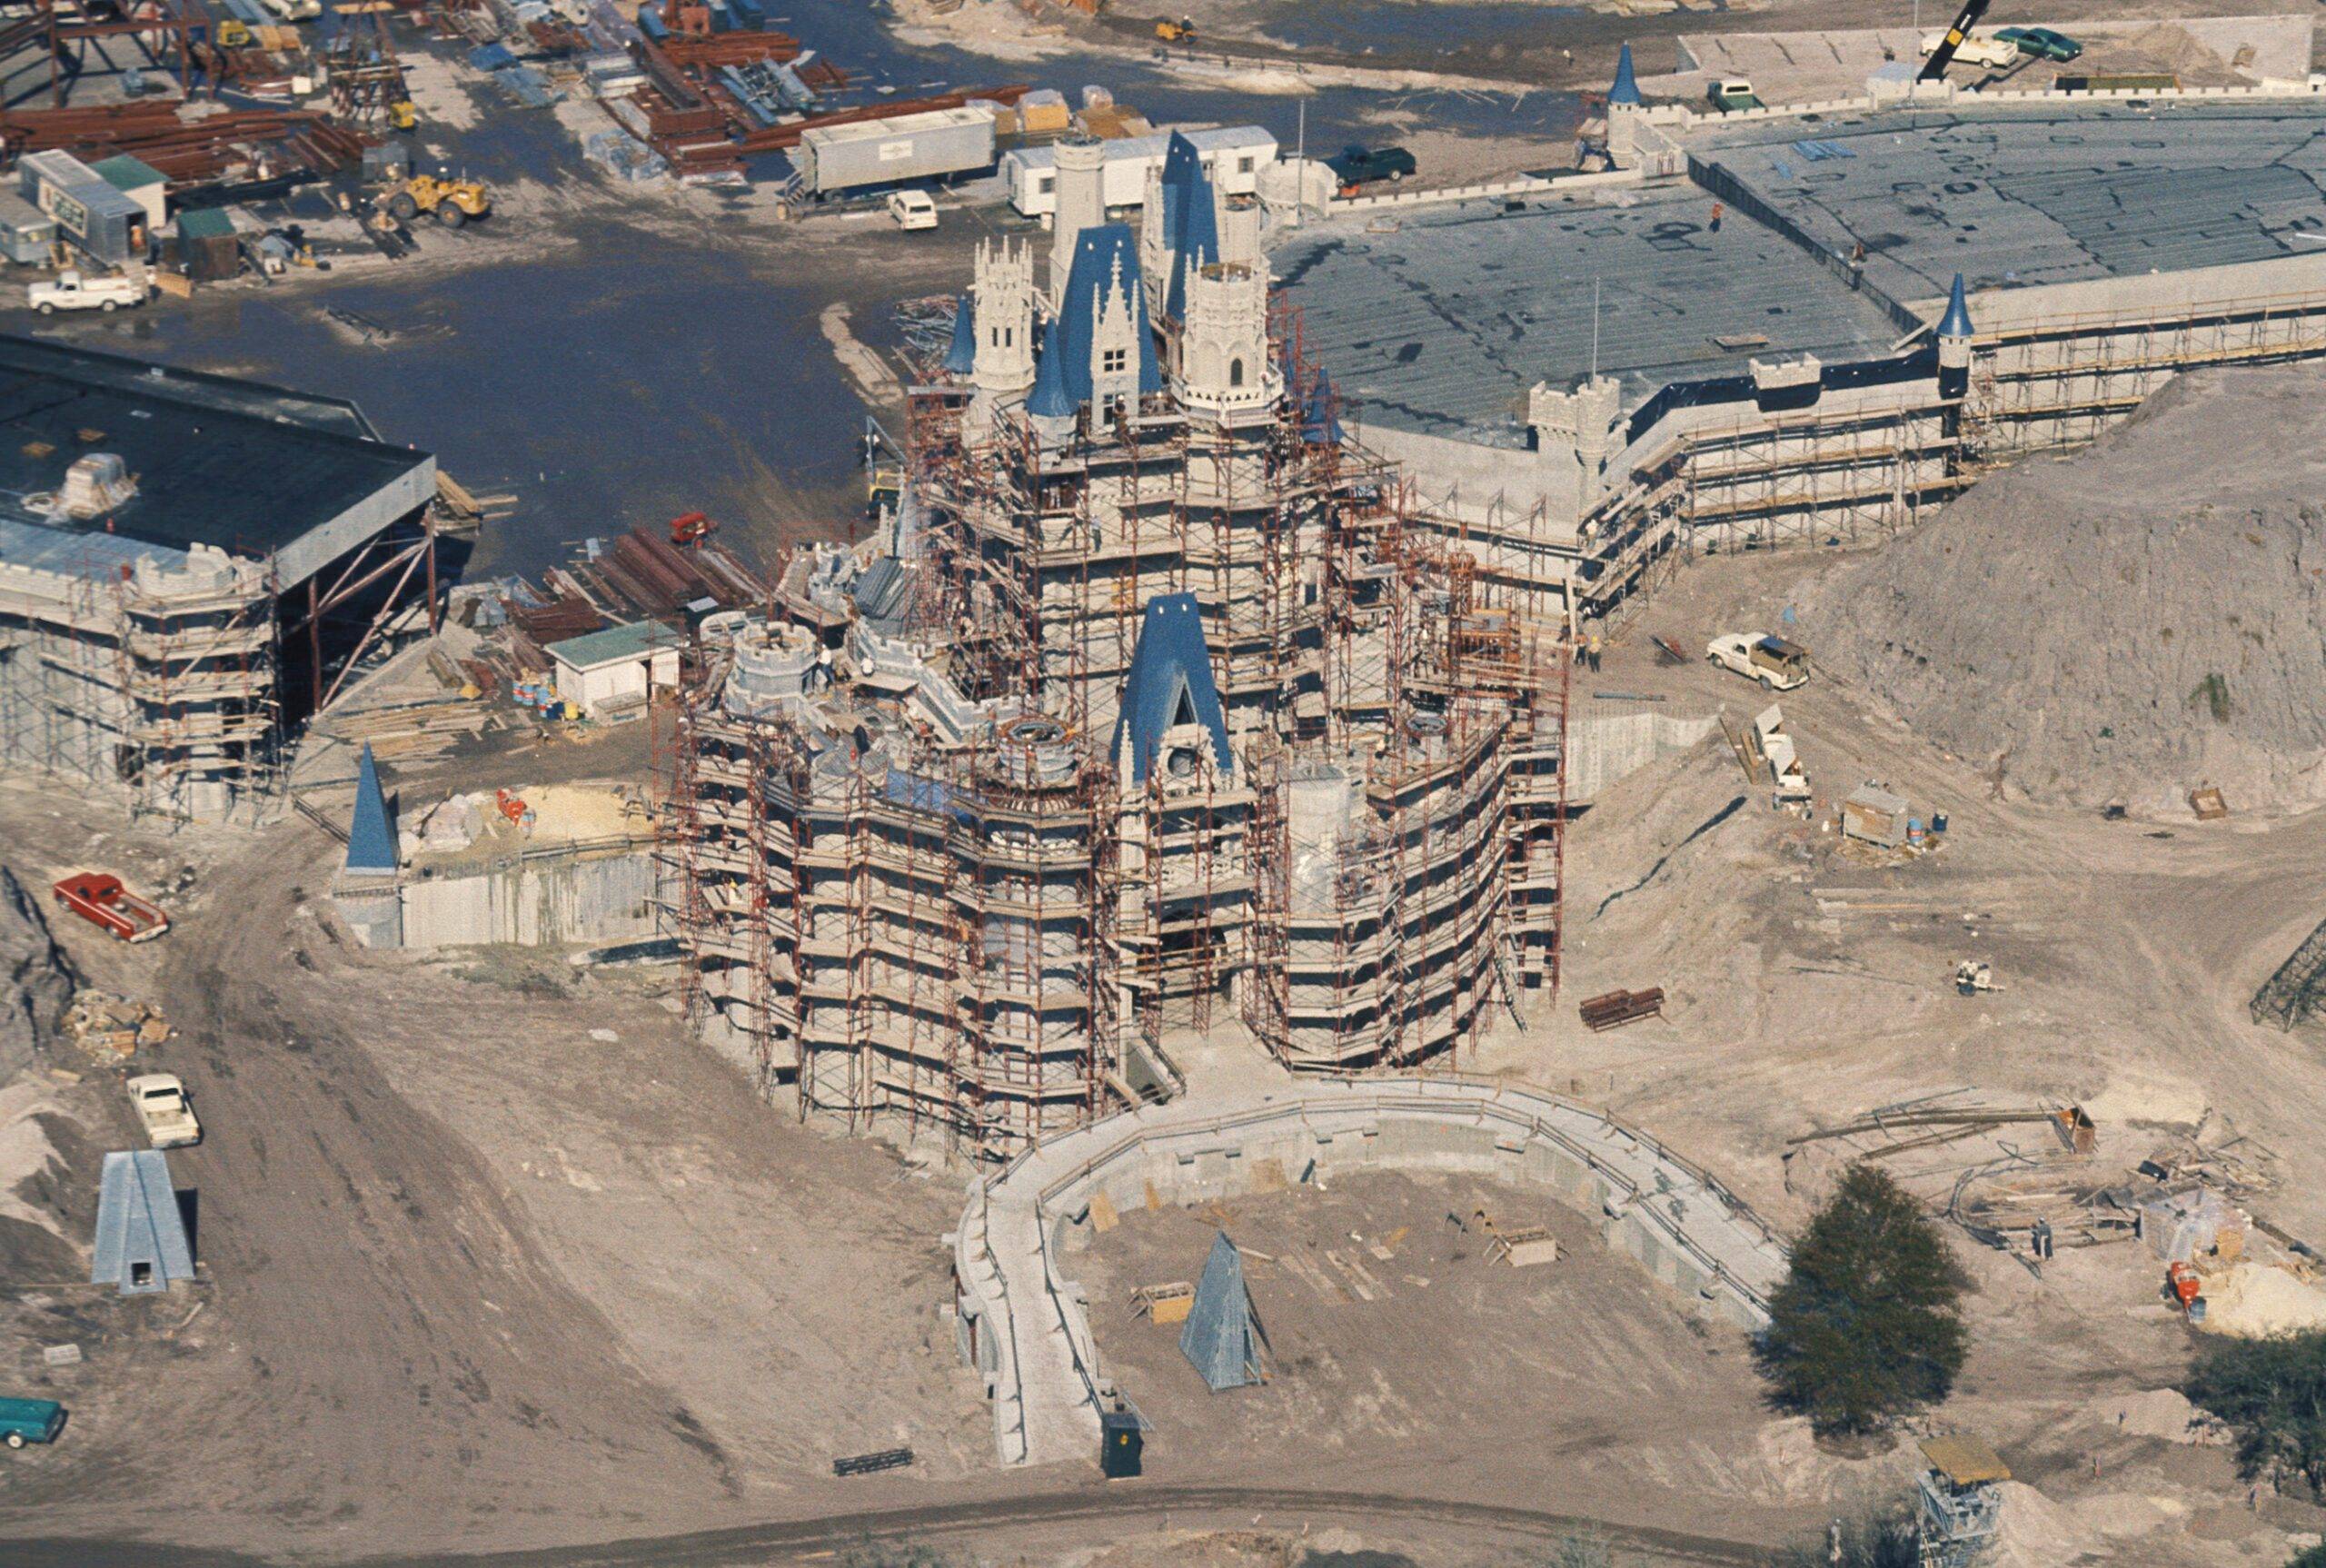 Cinderella Castle under construction at Magic Kingdom Park in 1971 at Walt Disney World Resort 